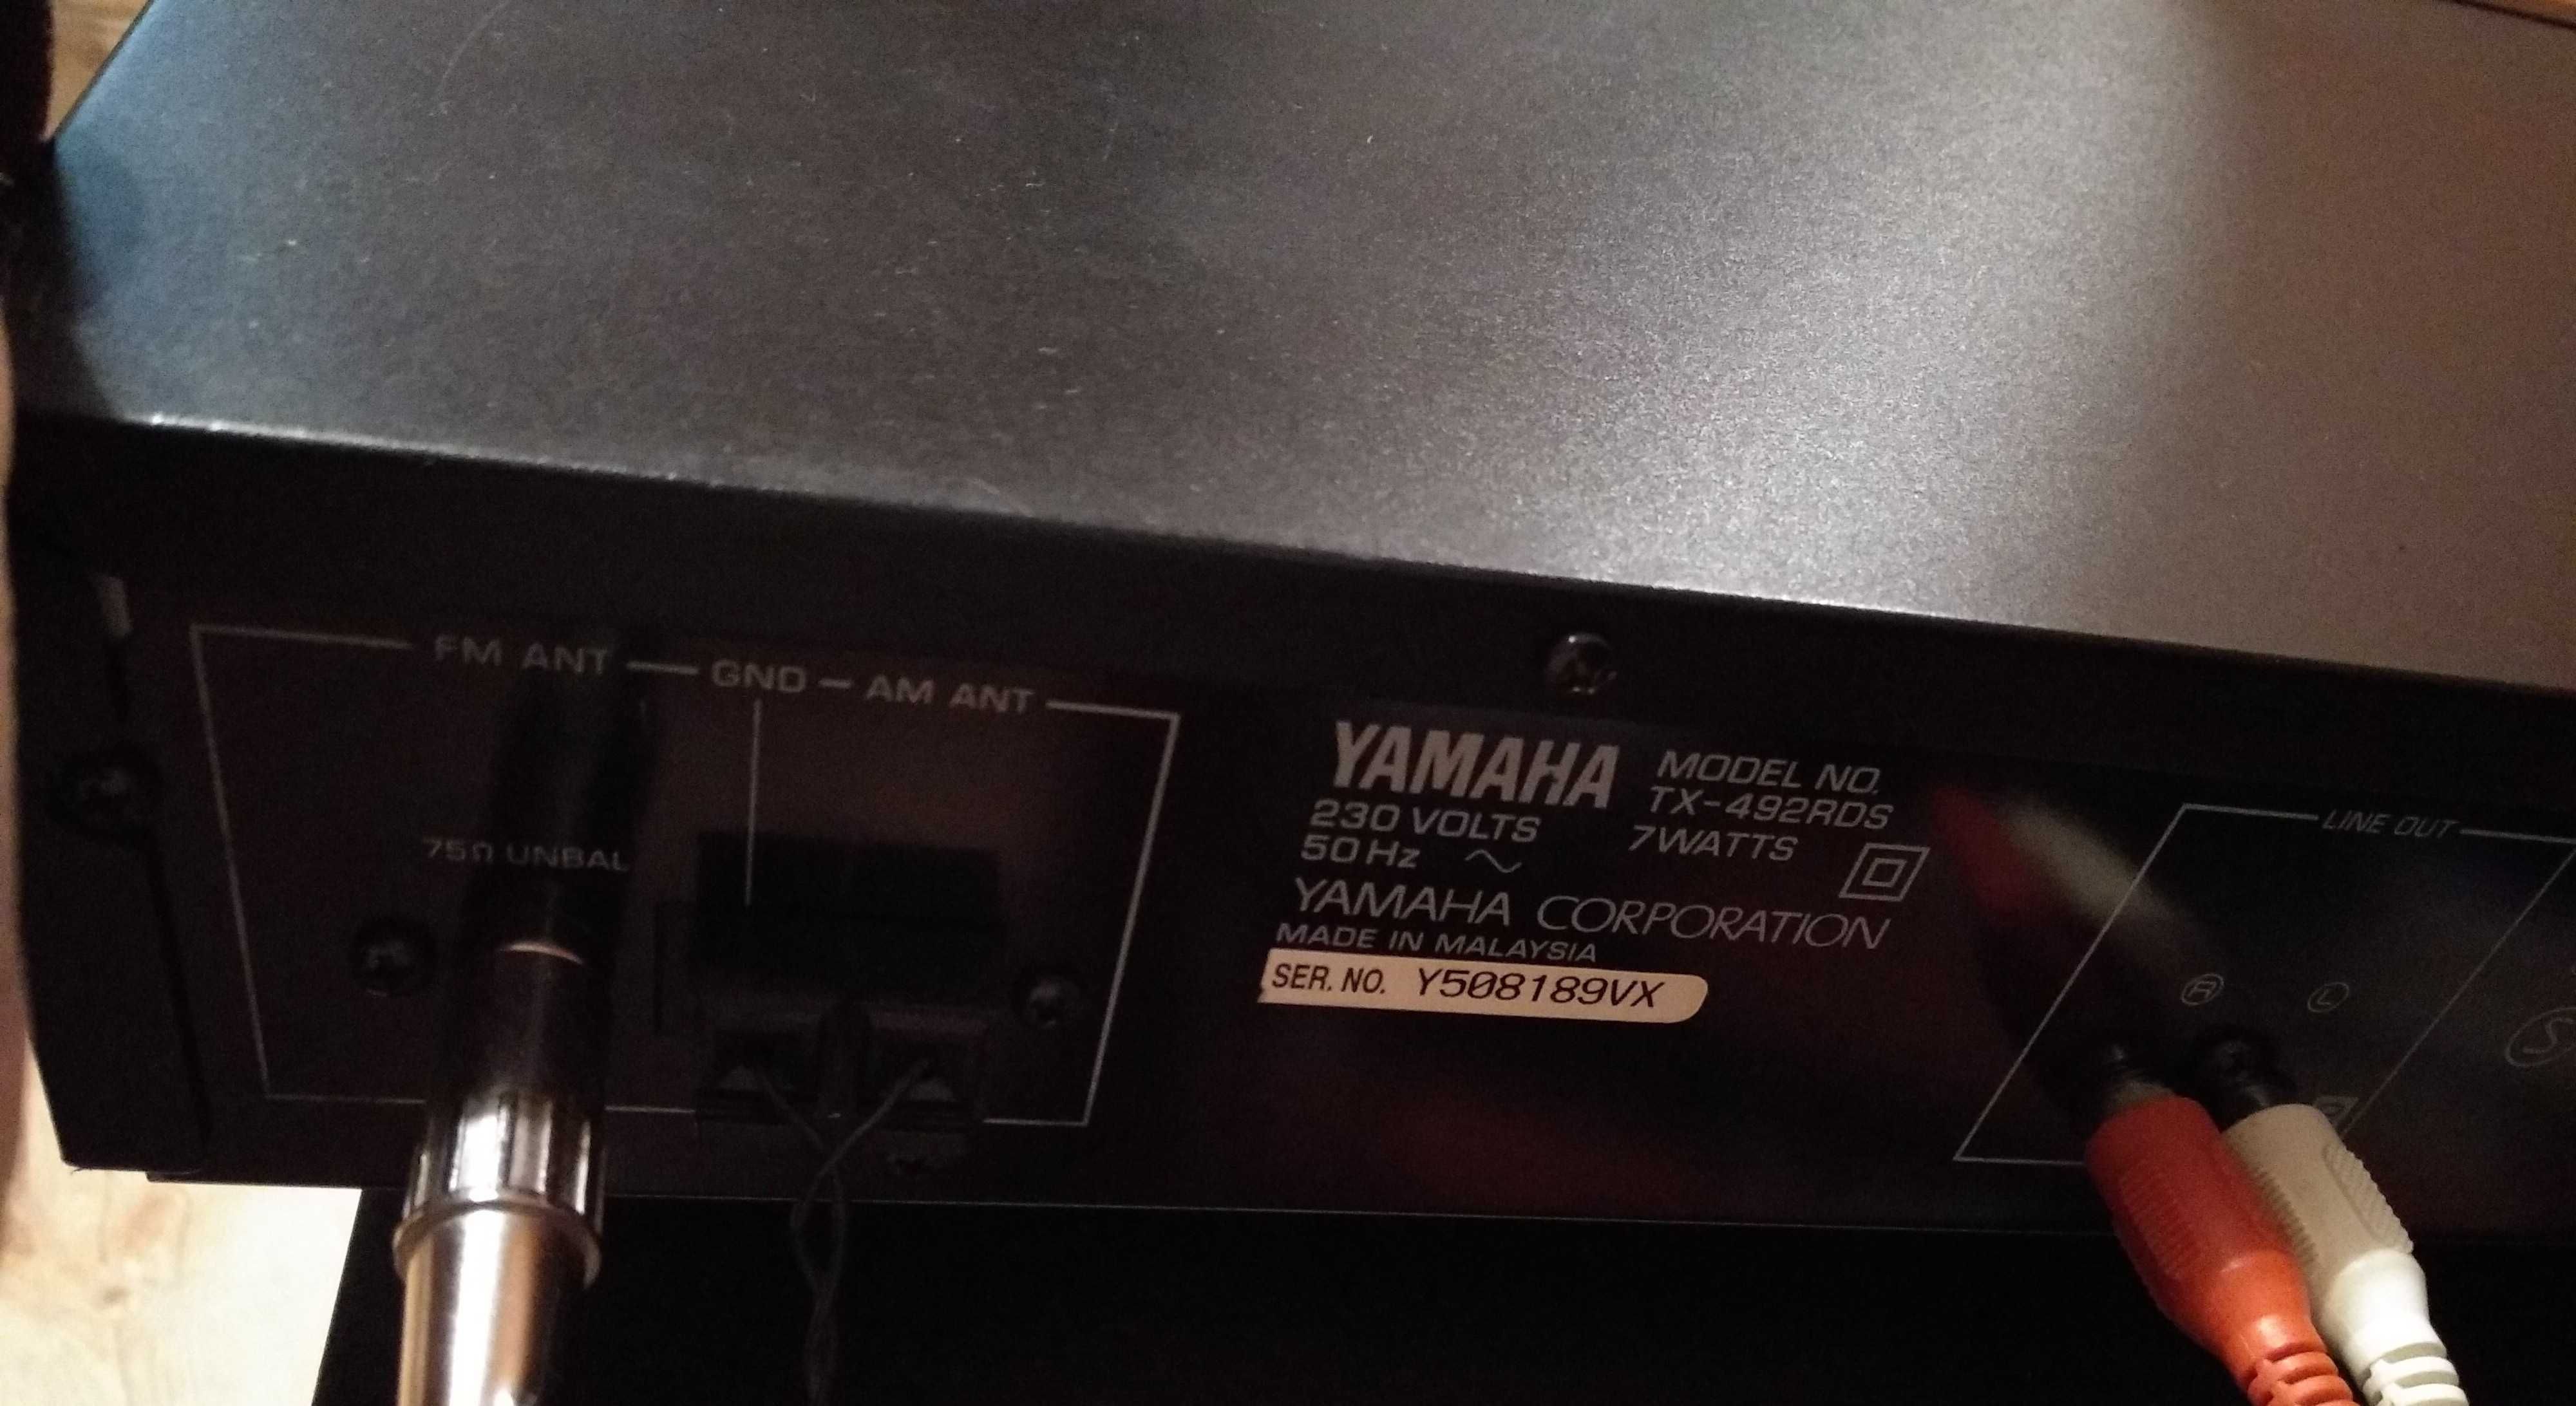 Sprzedam tuner Yamaha TX-492RDS